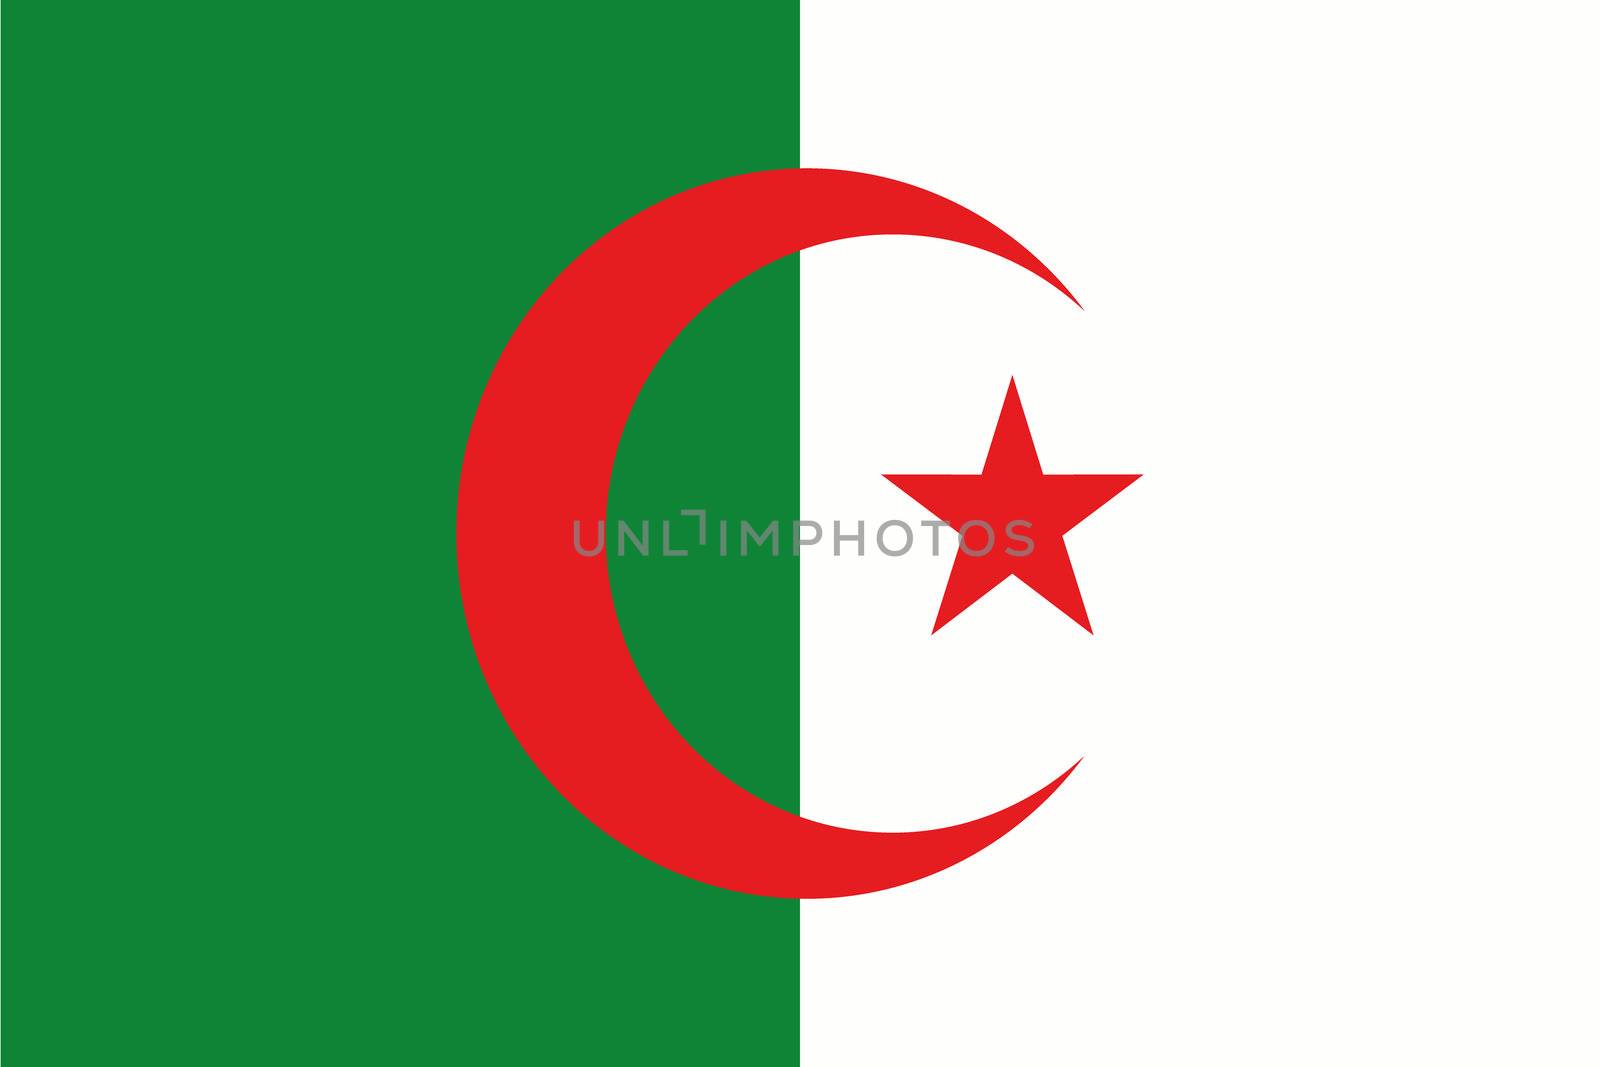 An illustration of the flag of Algeria